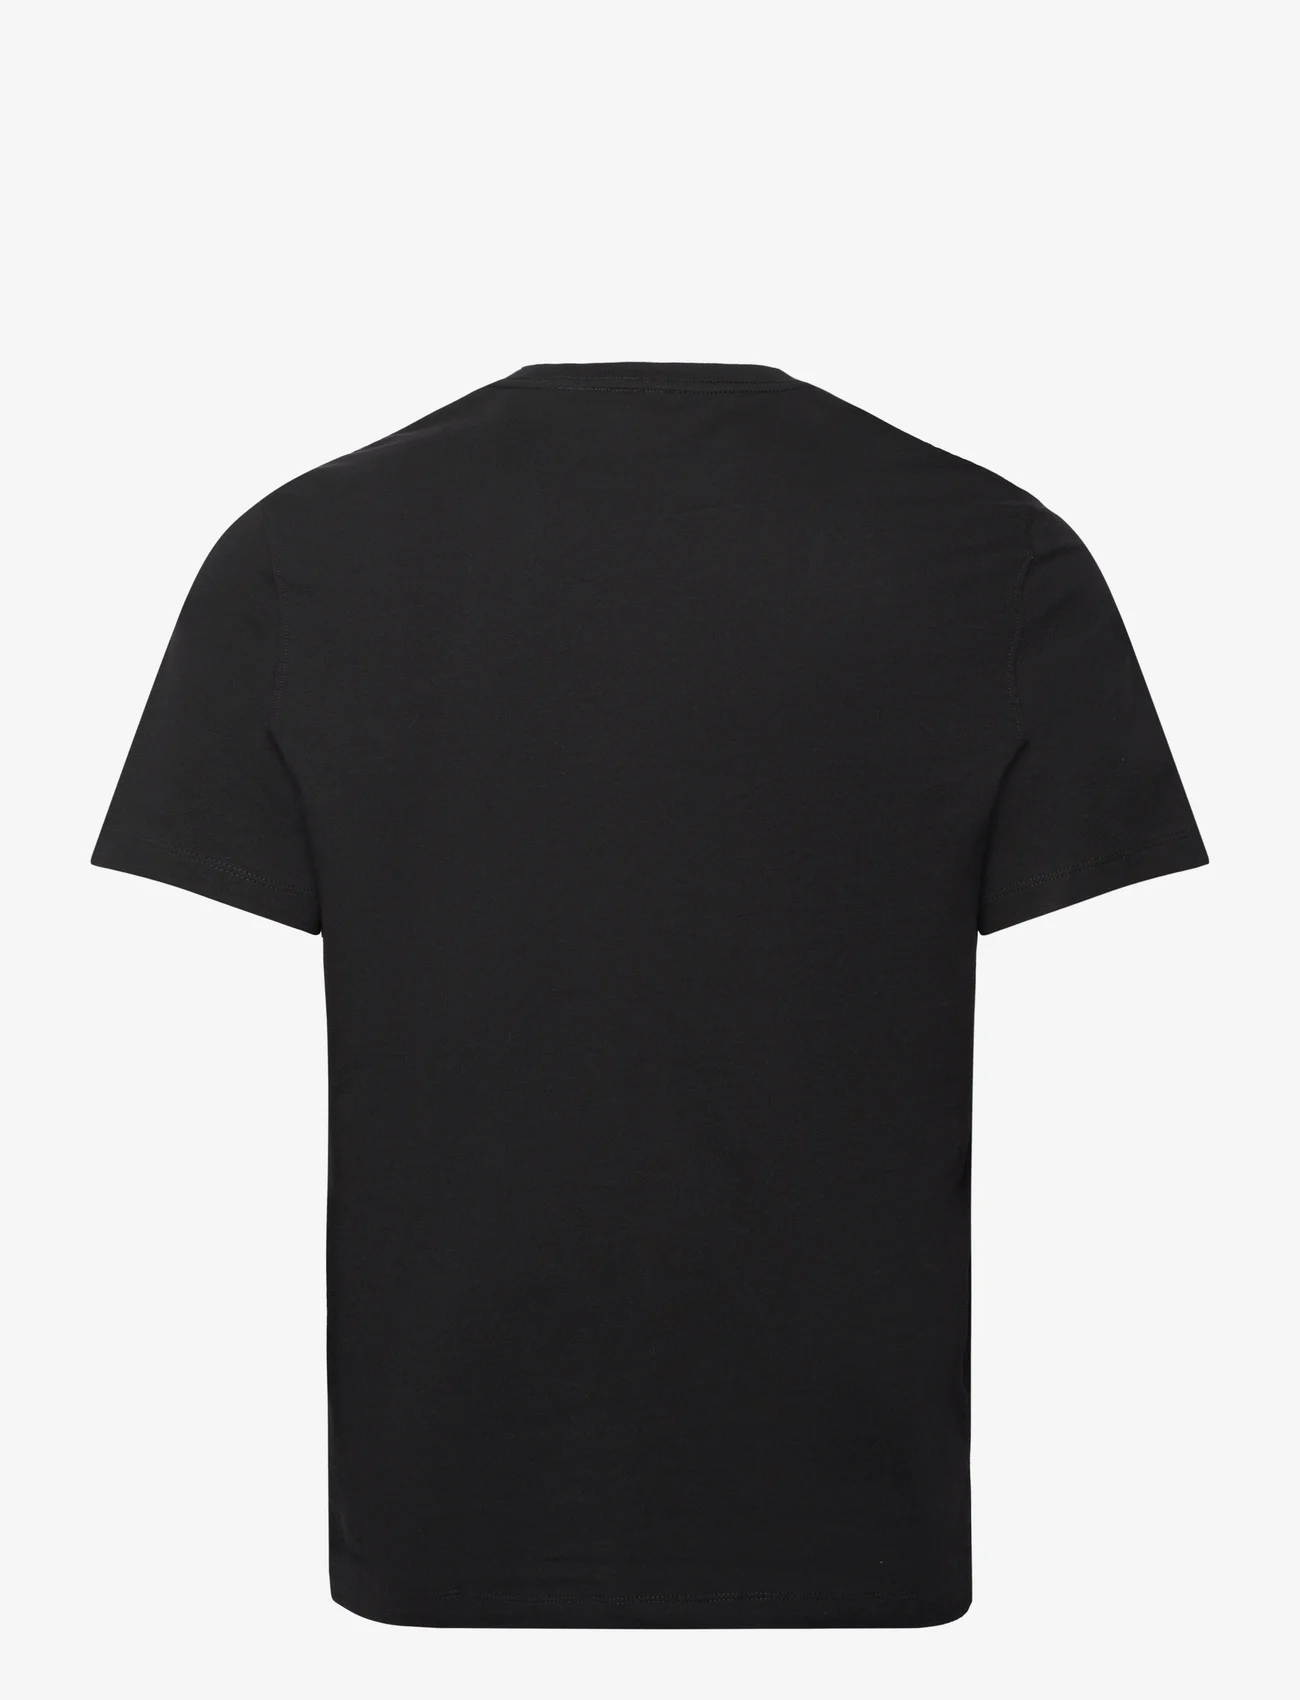 Michael Kors - EMPIRE FLAGSHIP TEE - kortærmede t-shirts - black - 1